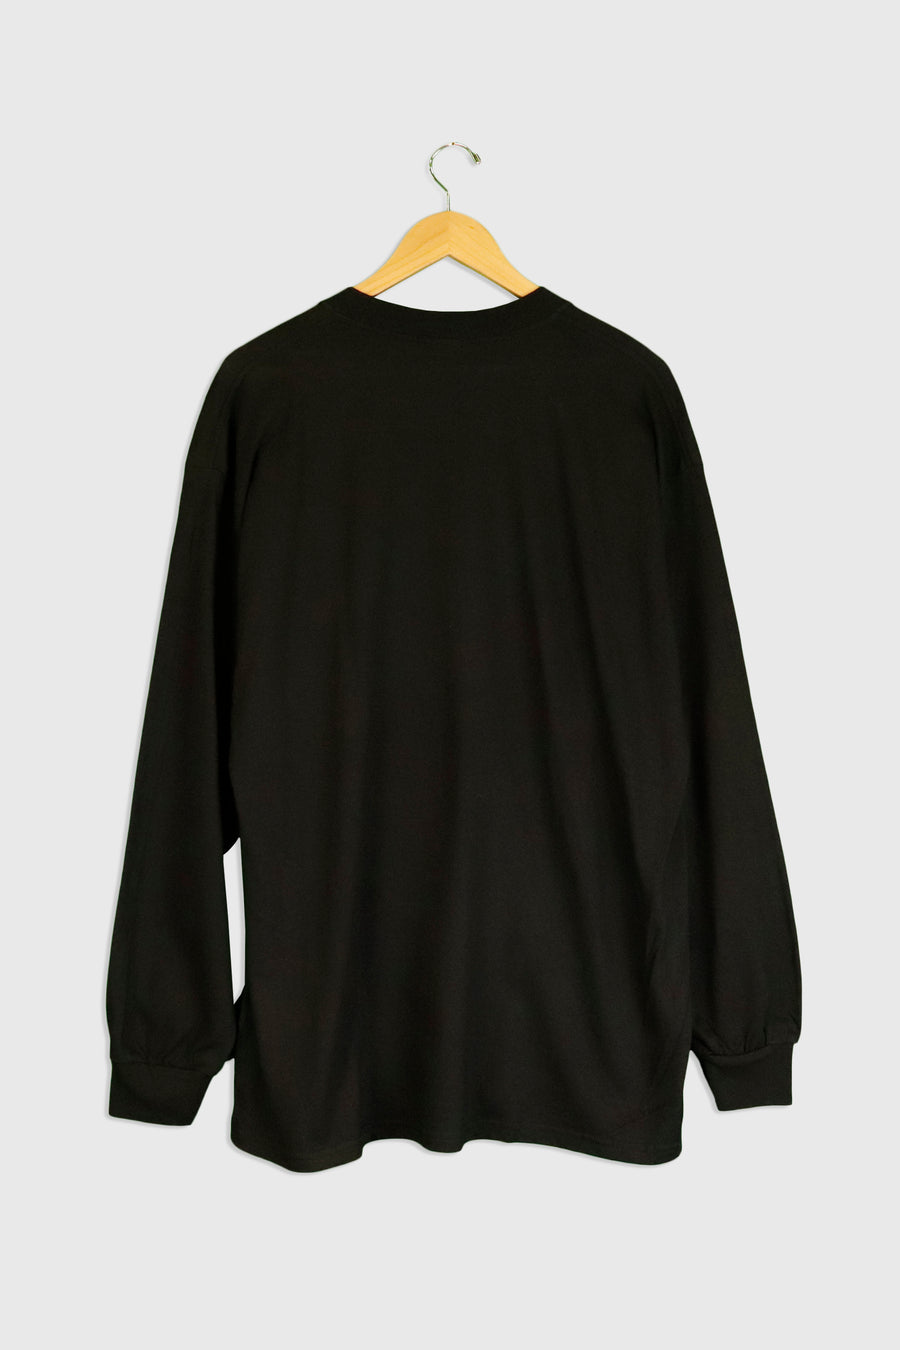 Vintage Mudvayne Graphic Band Long Sleeve Sweatshirt Sz XL